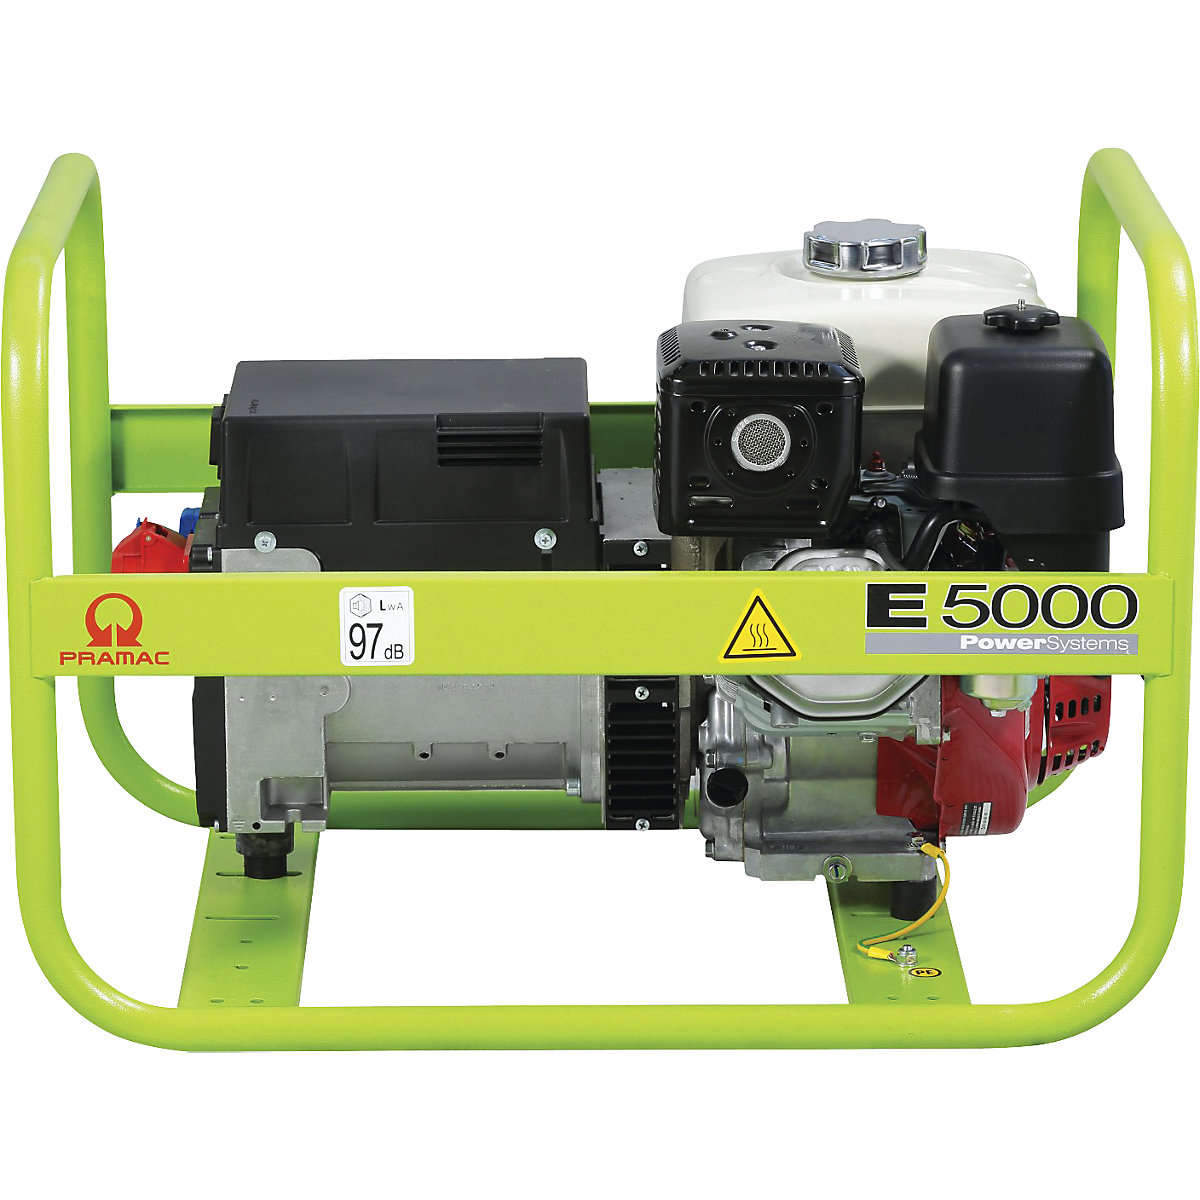 E series power generator – petrol, 230 V – Pramac (Product illustration 5)-4